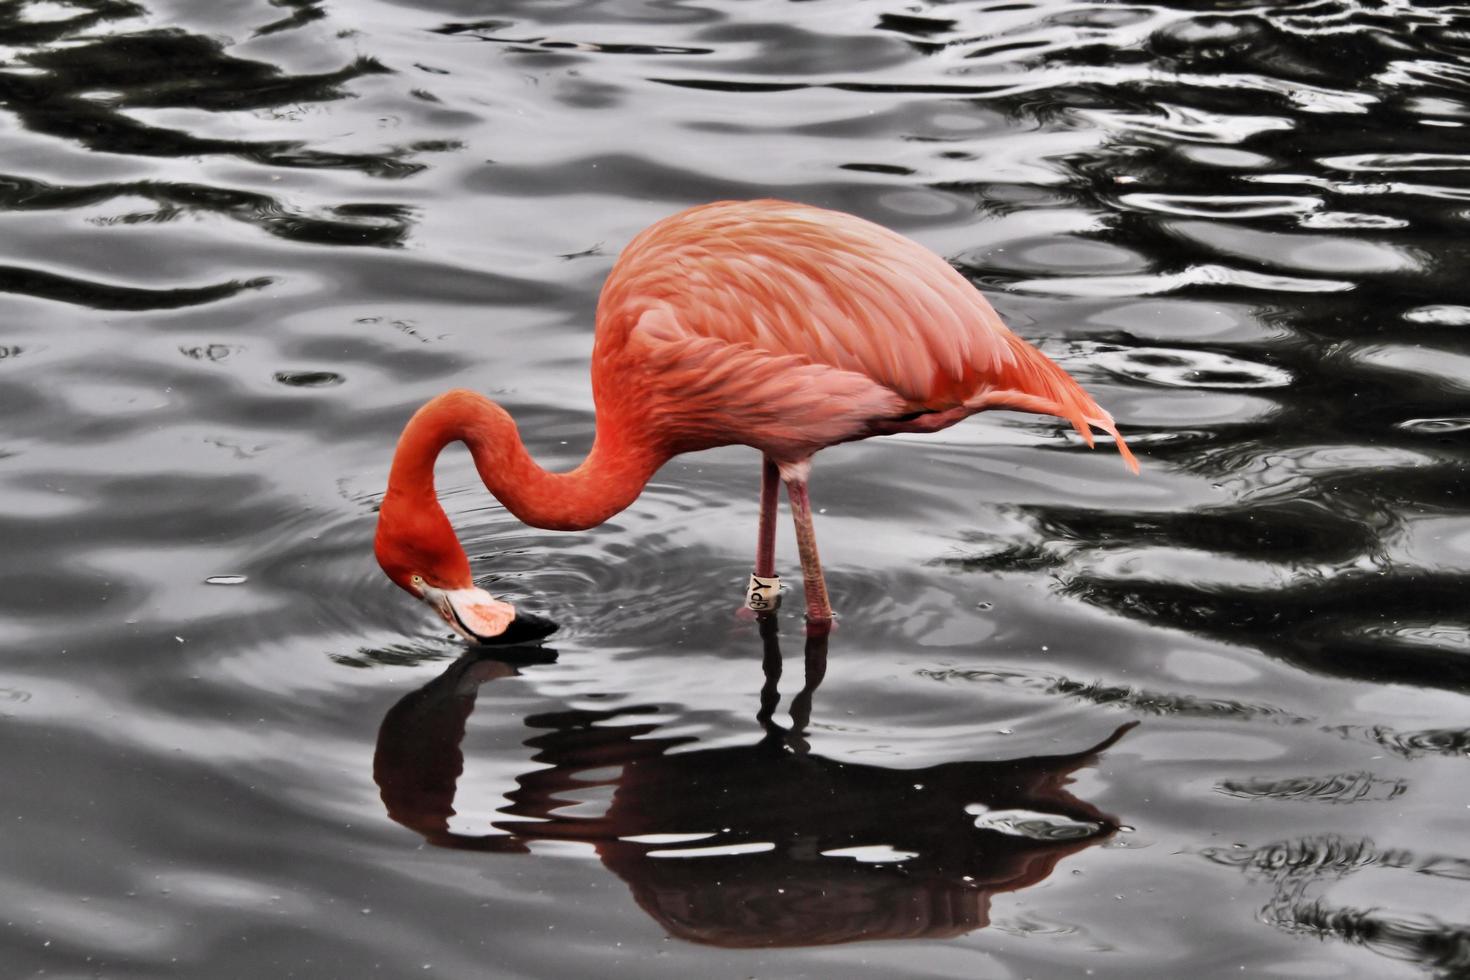 Blick auf einen Flamingo im Naturschutzgebiet Slimbridge foto